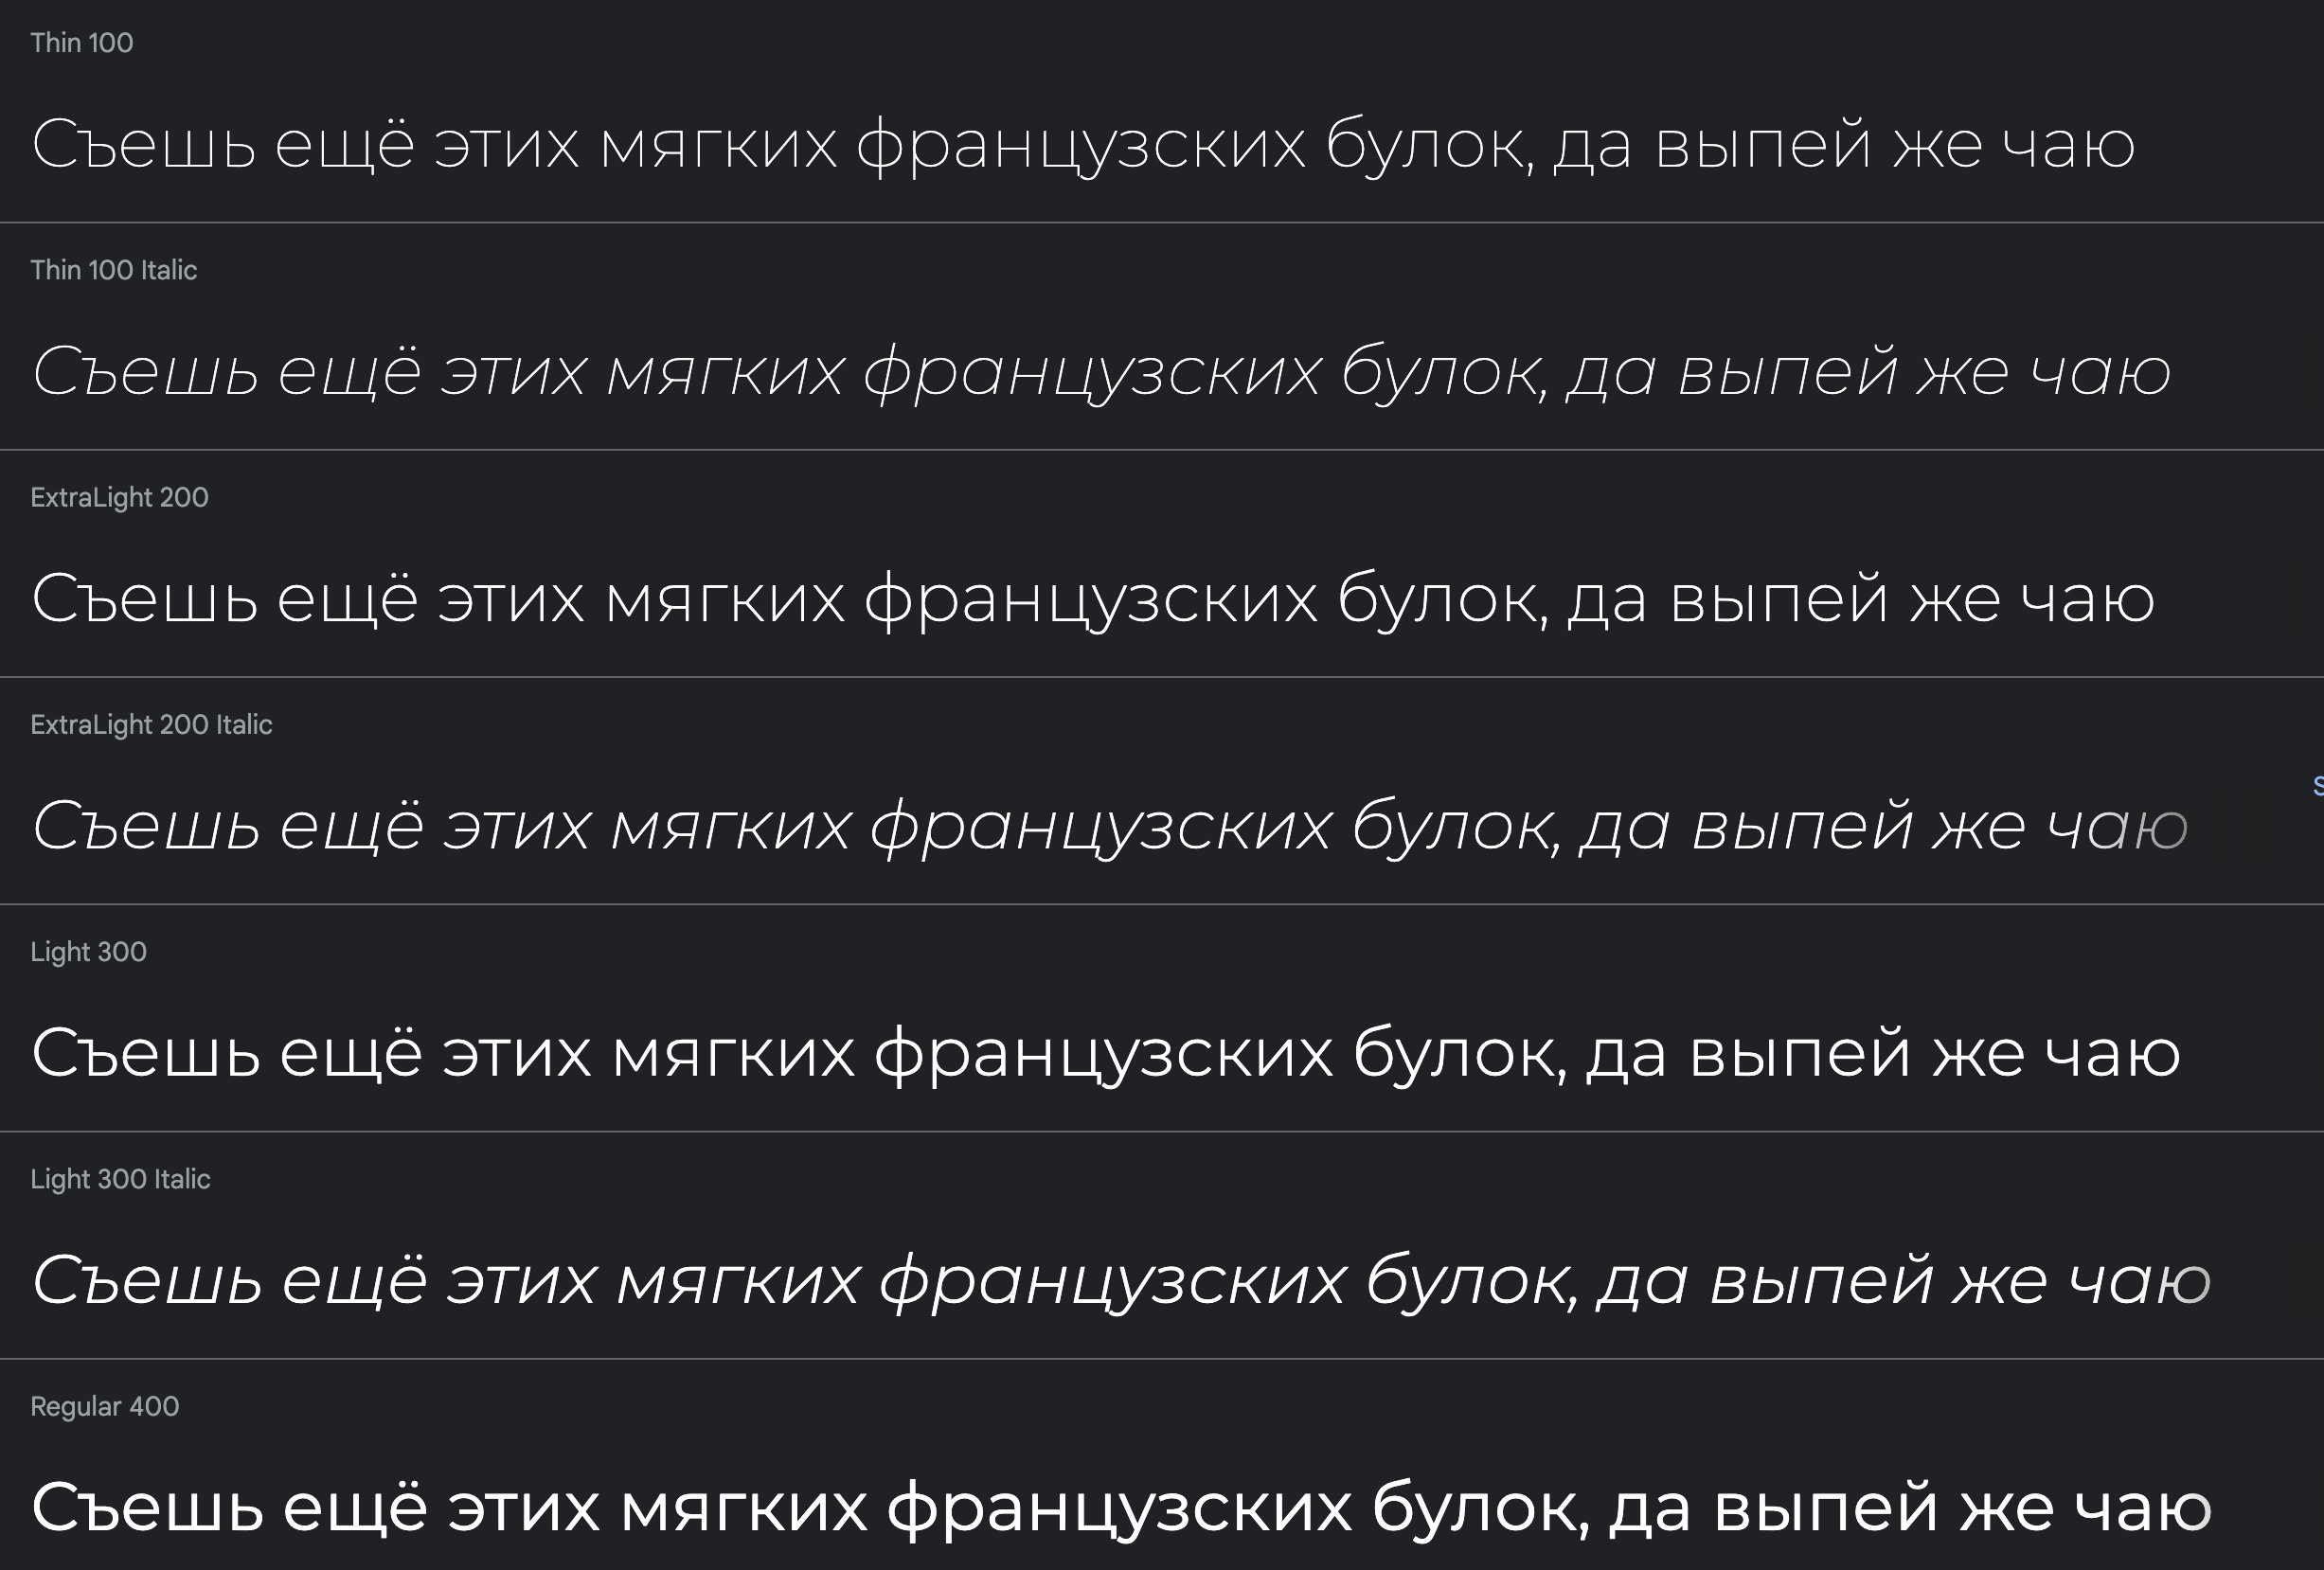 Montserrat - бесплатный кириллический шрифт от Google Fonts